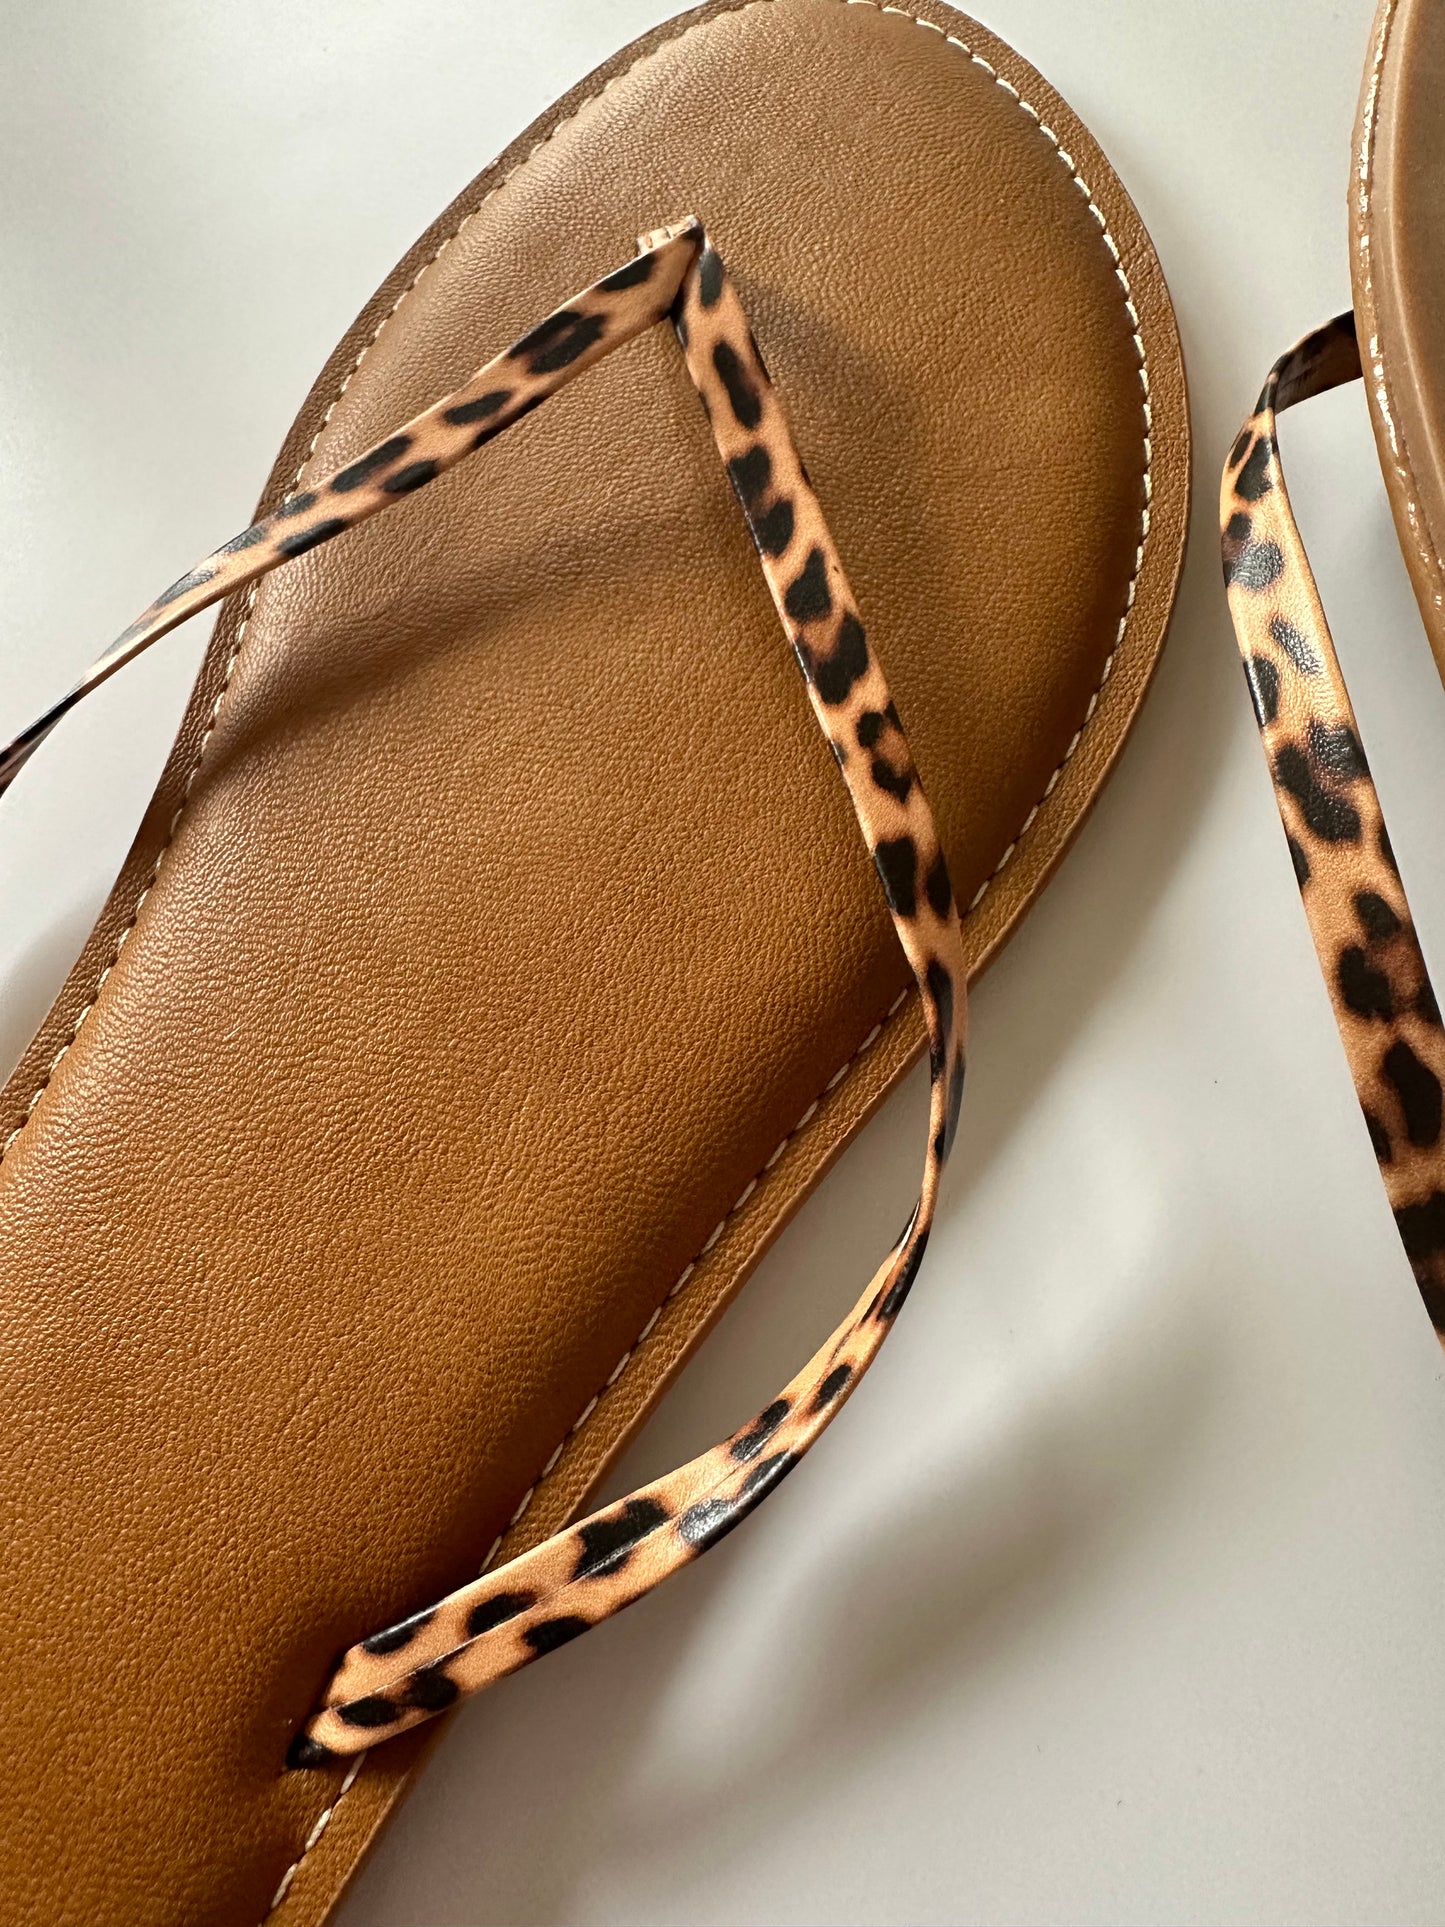 Thong Sandal Leopard size 13 UK